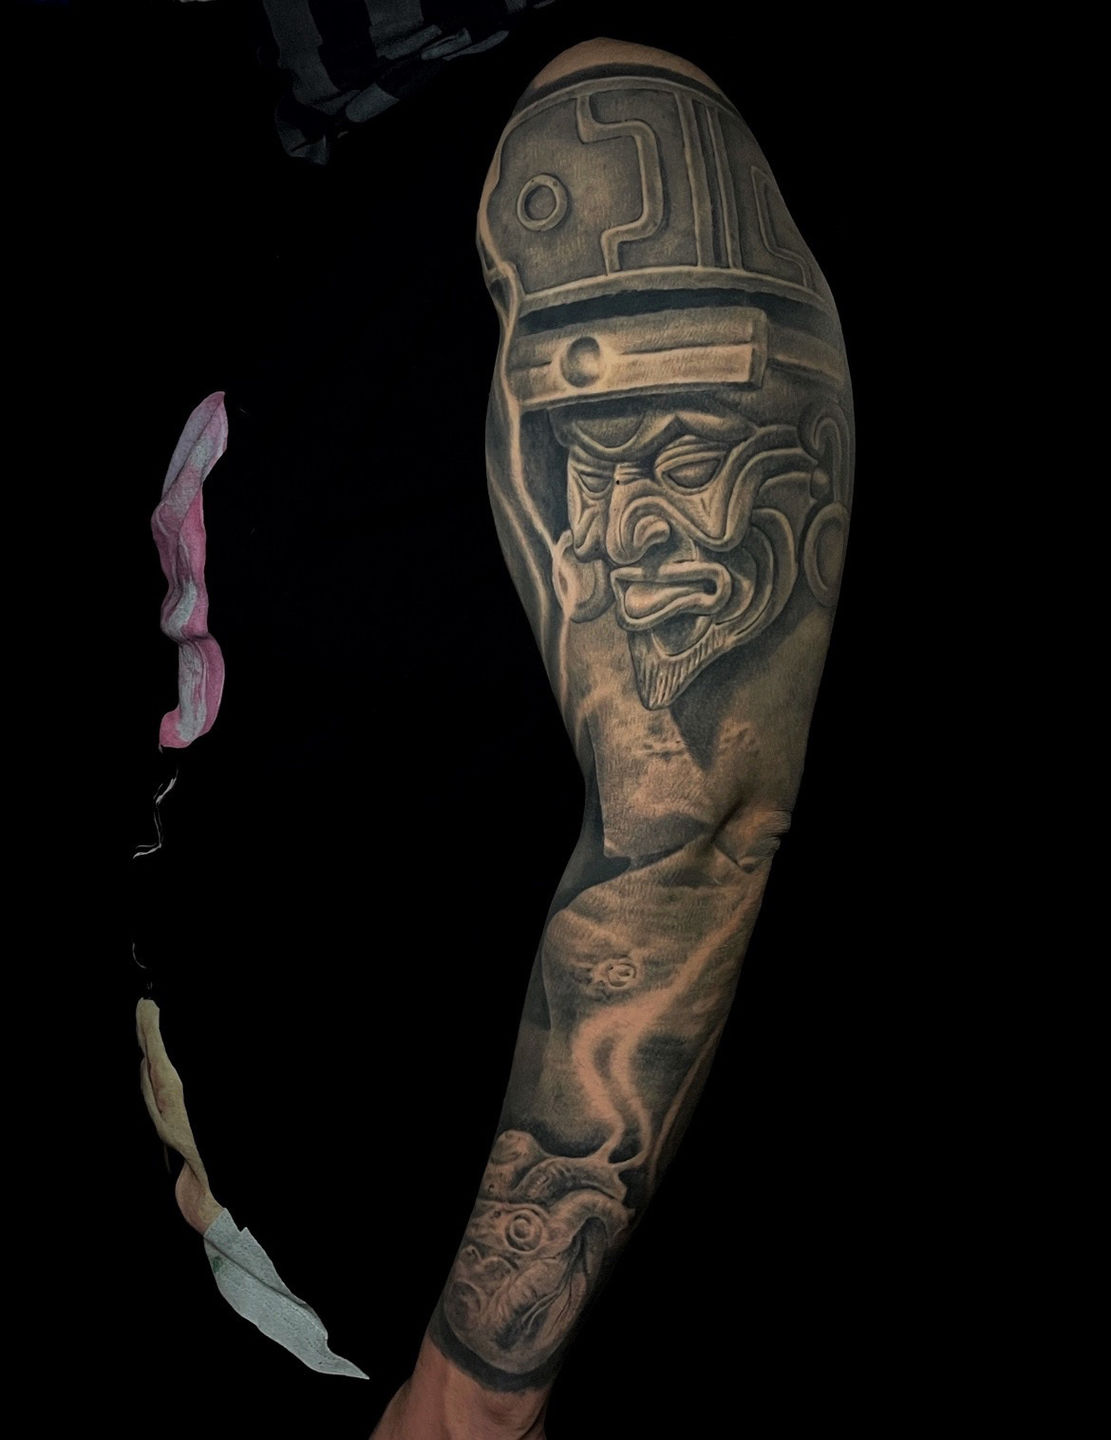 Full Sleeve Tattoos Done at Anahata Ink Tattoo Kuta Bali